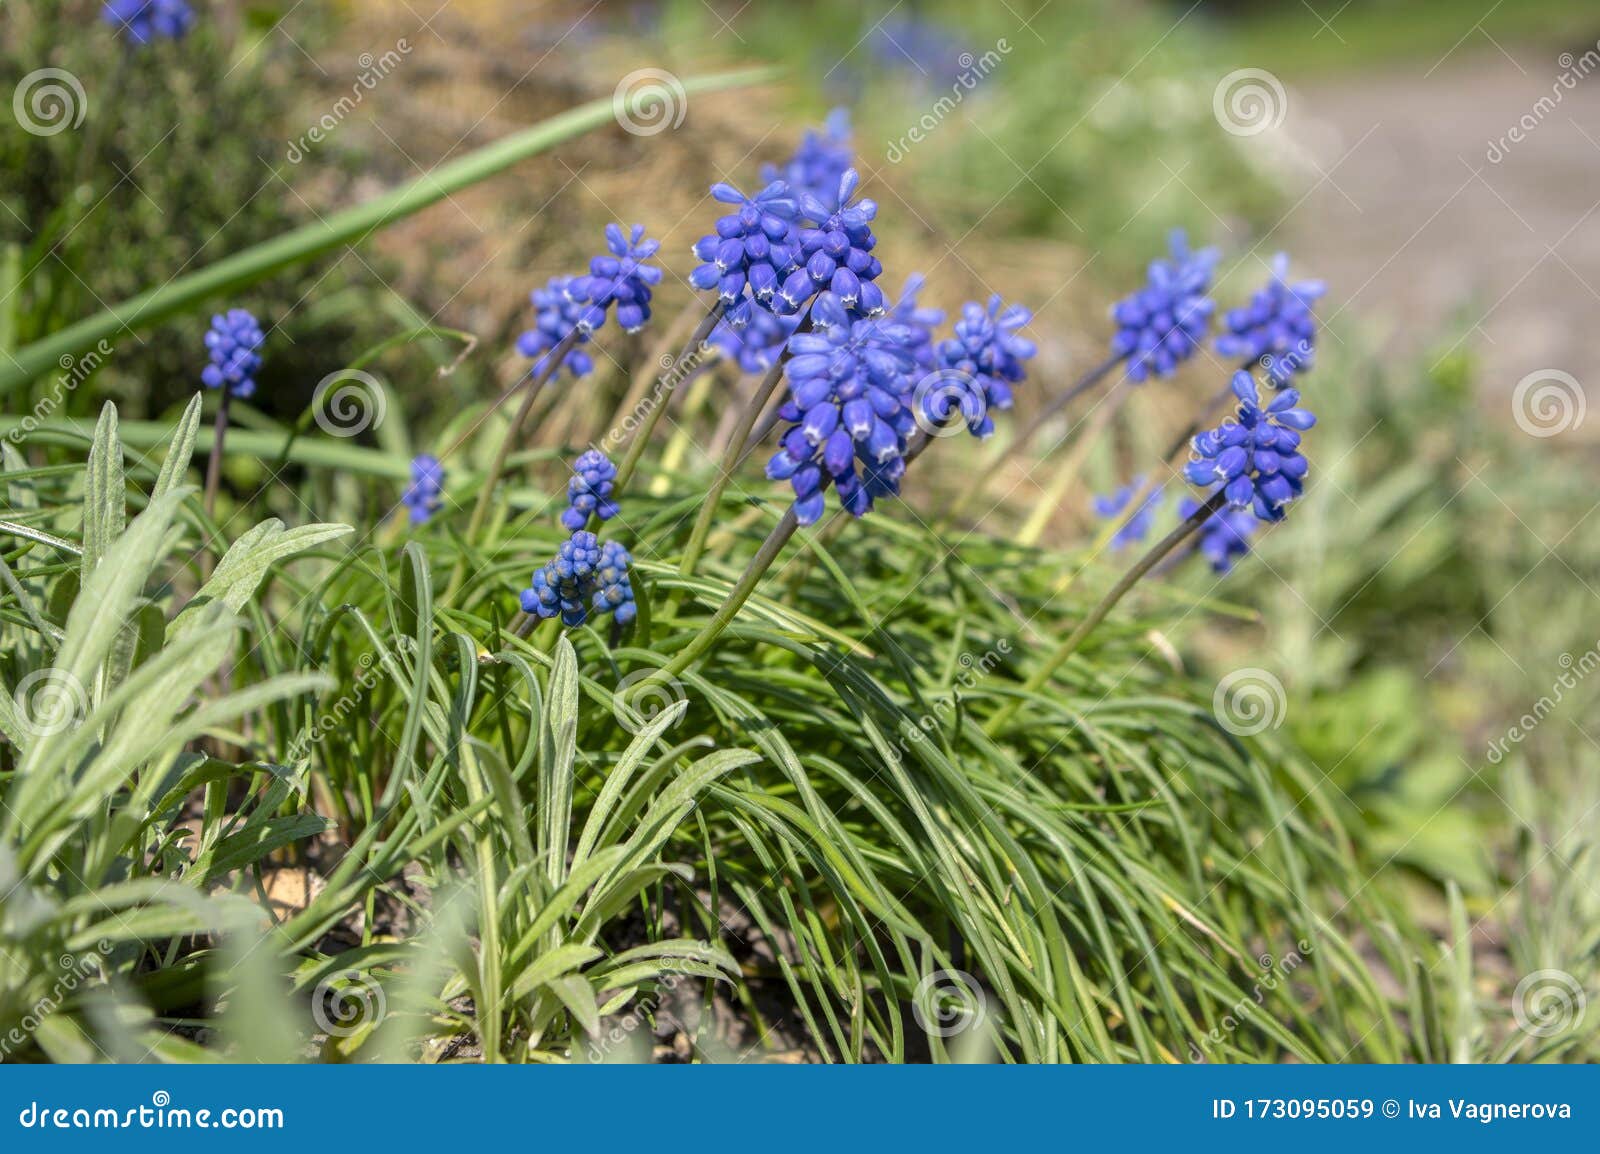 muscari armeniacum blühende pflanze, traubenhyazinthenblumen blue